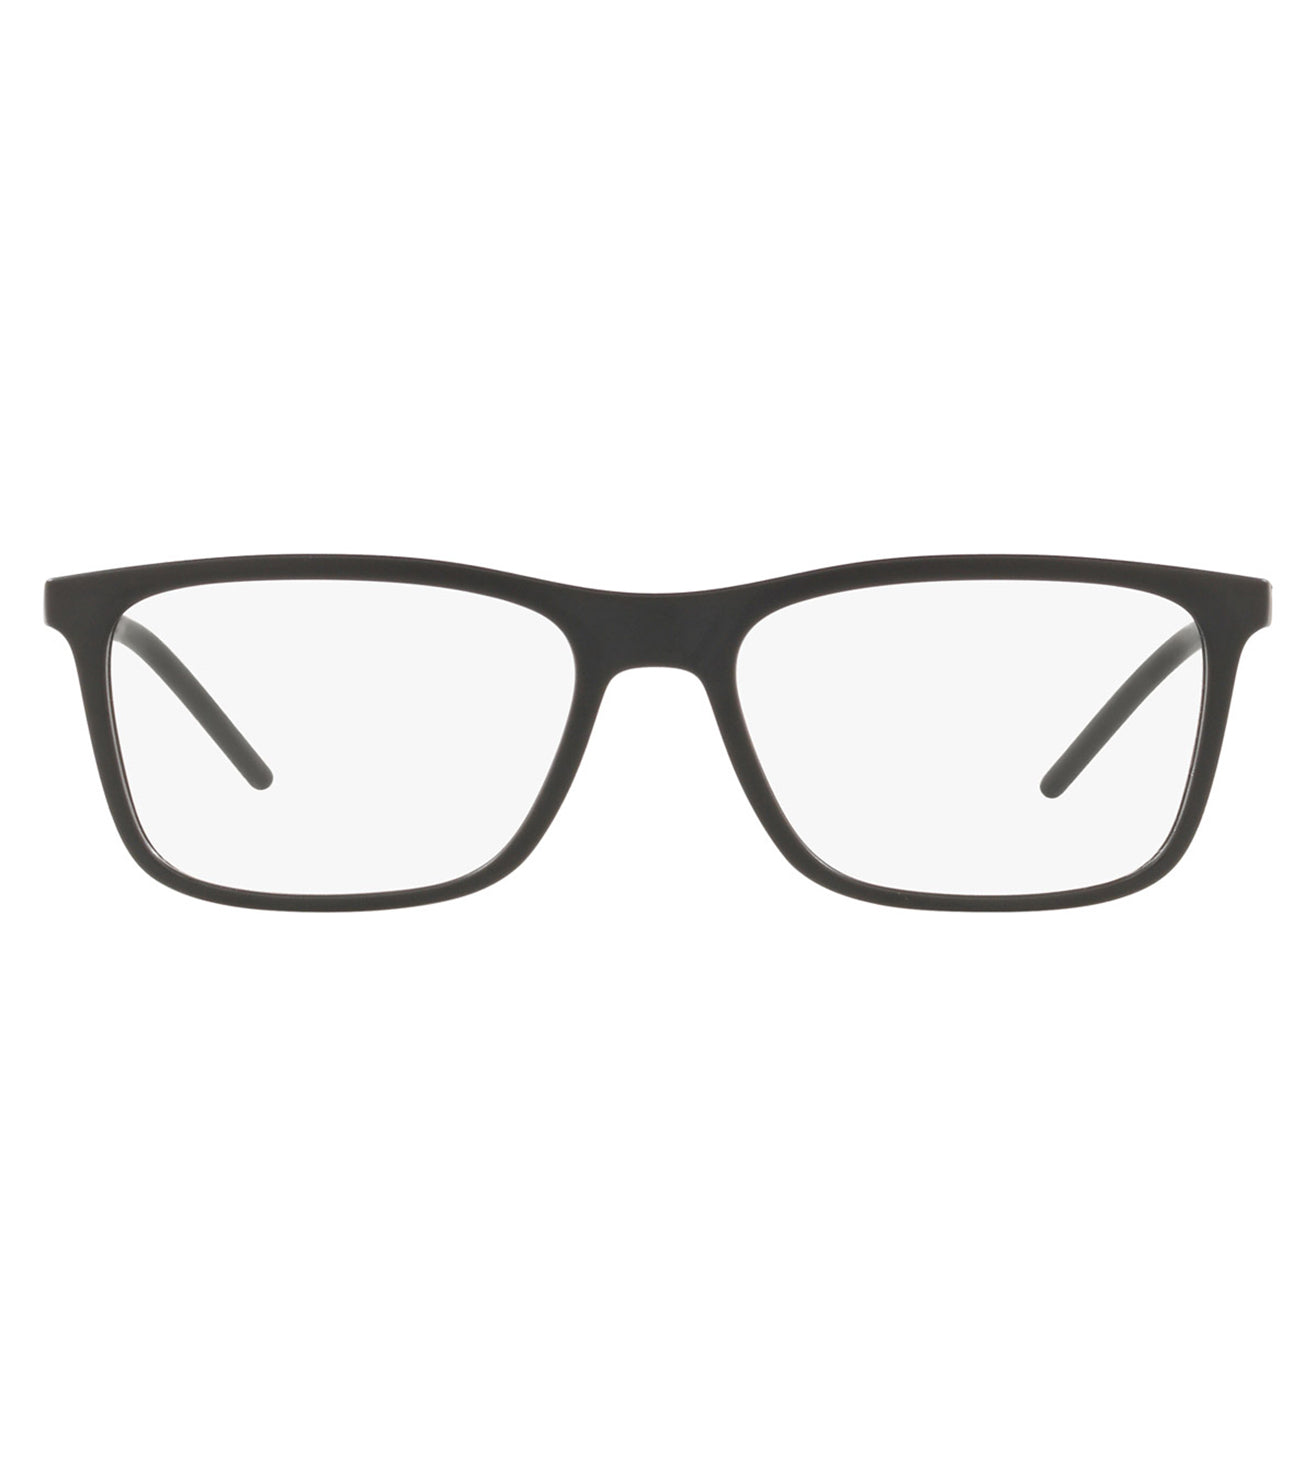 Oval Square Black Eyeglasses